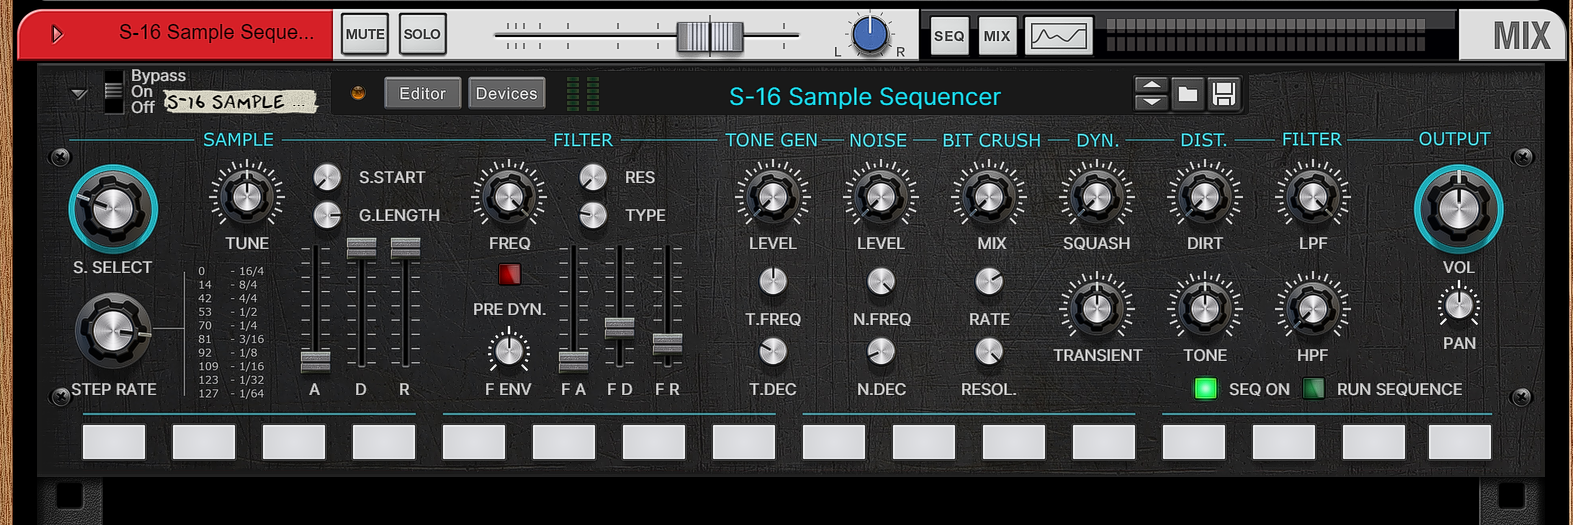 s-16 sample sequencer screenshot.png